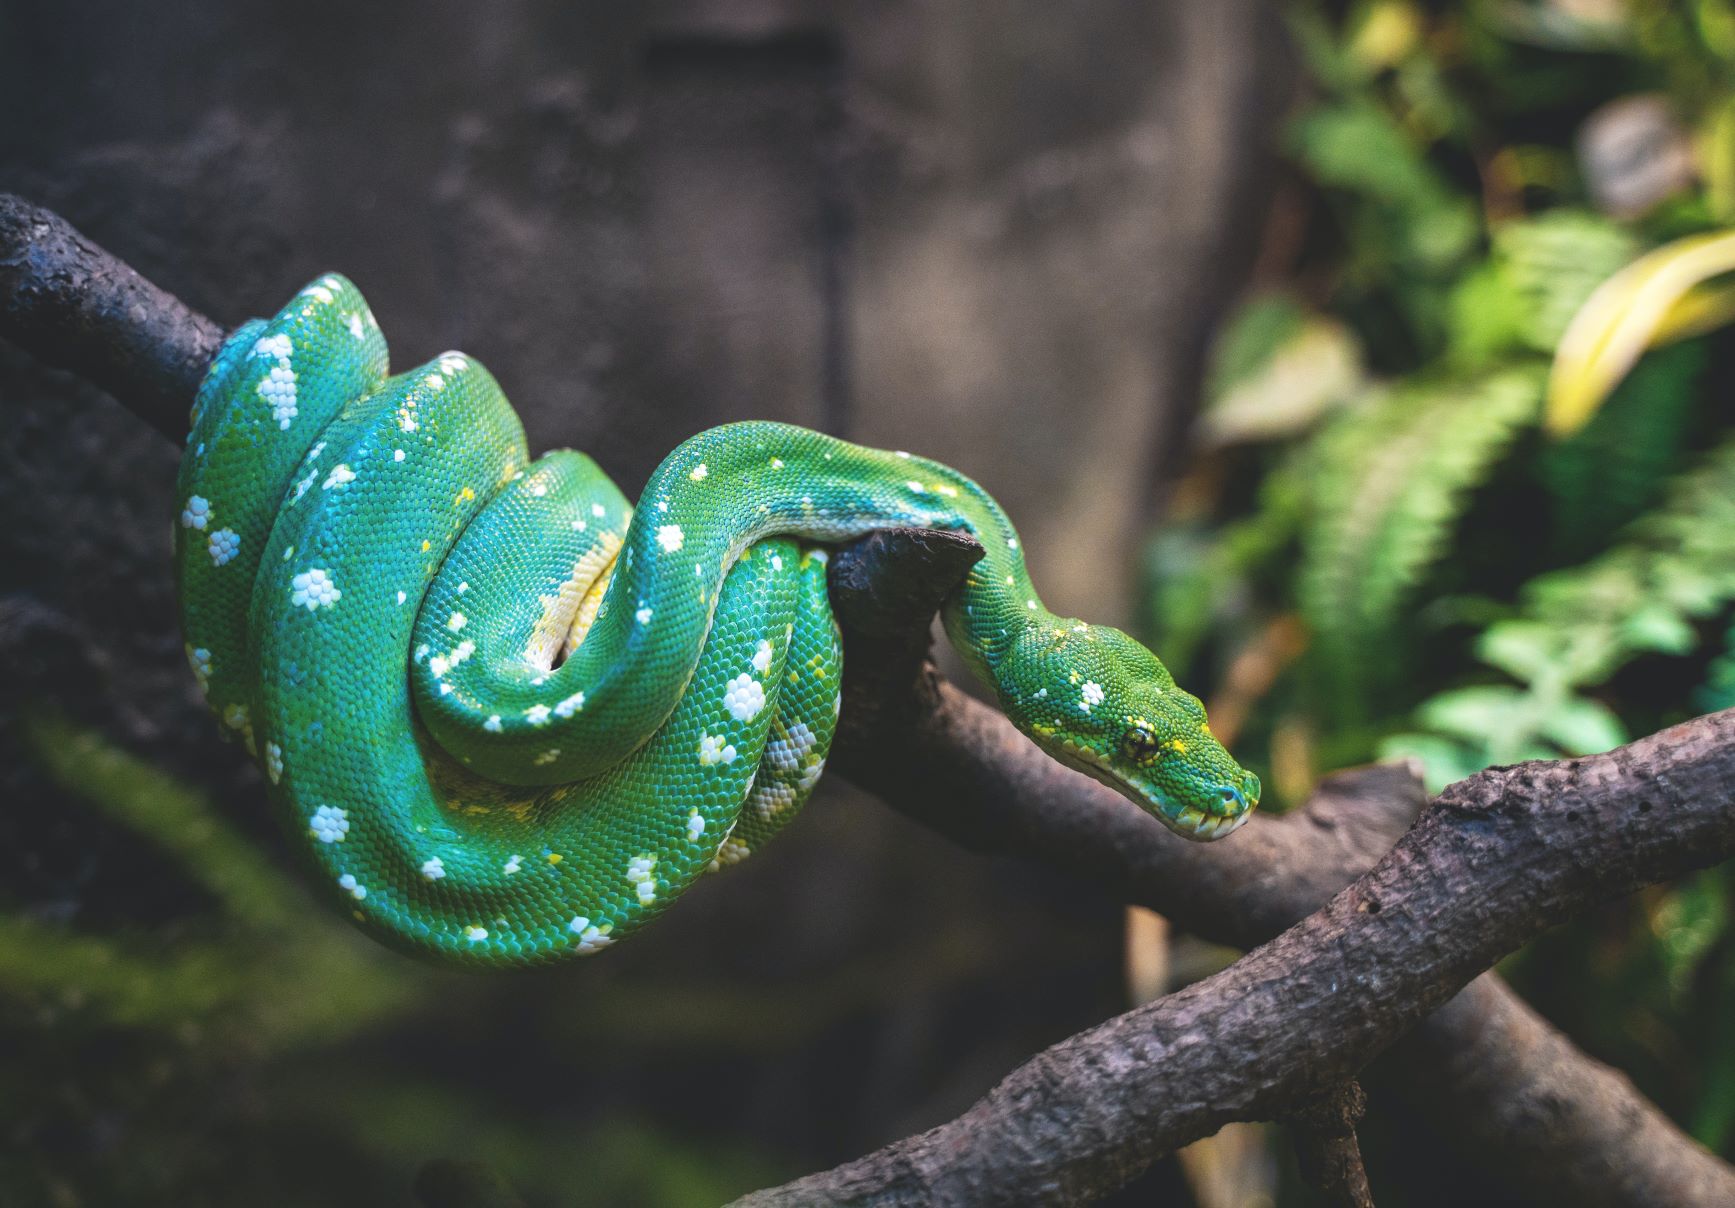 Green Snake on a Tree Branch - Green Snake on a Tree Branch - Photo by Tyler B on Unsplash